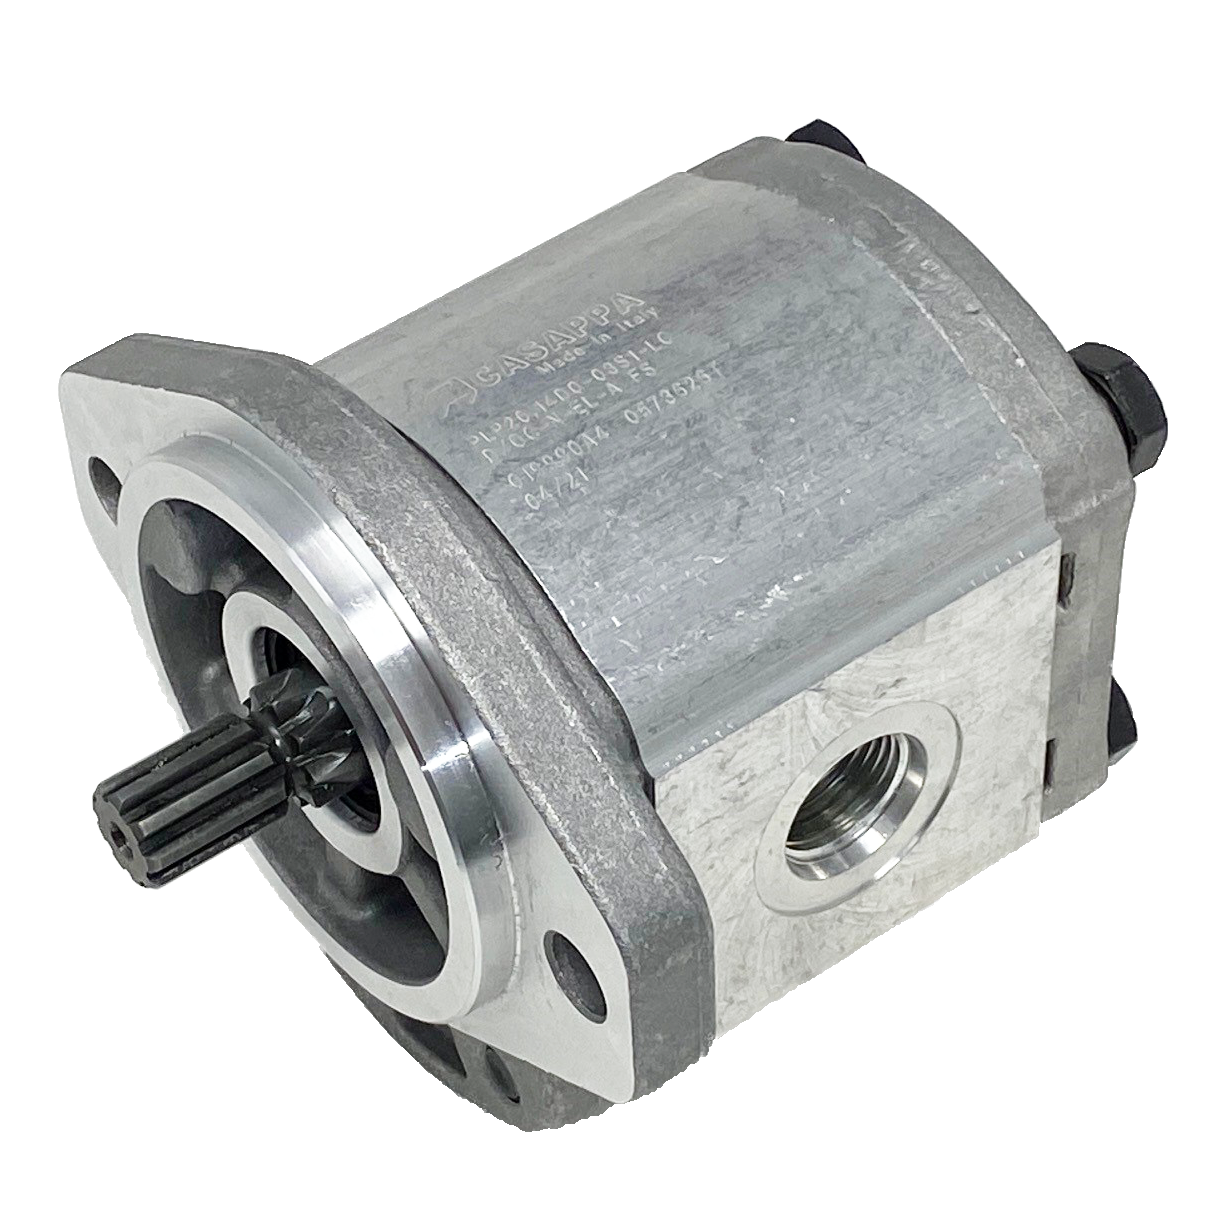 PLM20.16R0-07S1-LOC/OD-N-EL : Casappa Polaris Gear Motor, 16.85cc, 3625psi Rated, 3000RPM, Reversible Rear External Drain, 11T 16/32dp Shaft, SAE A 2-Bolt Flange, 0.625 (5/8") #10 SAE Inlet, 0.75 (3/4") #12 SAE Outlet, Aluminum Body & Flange